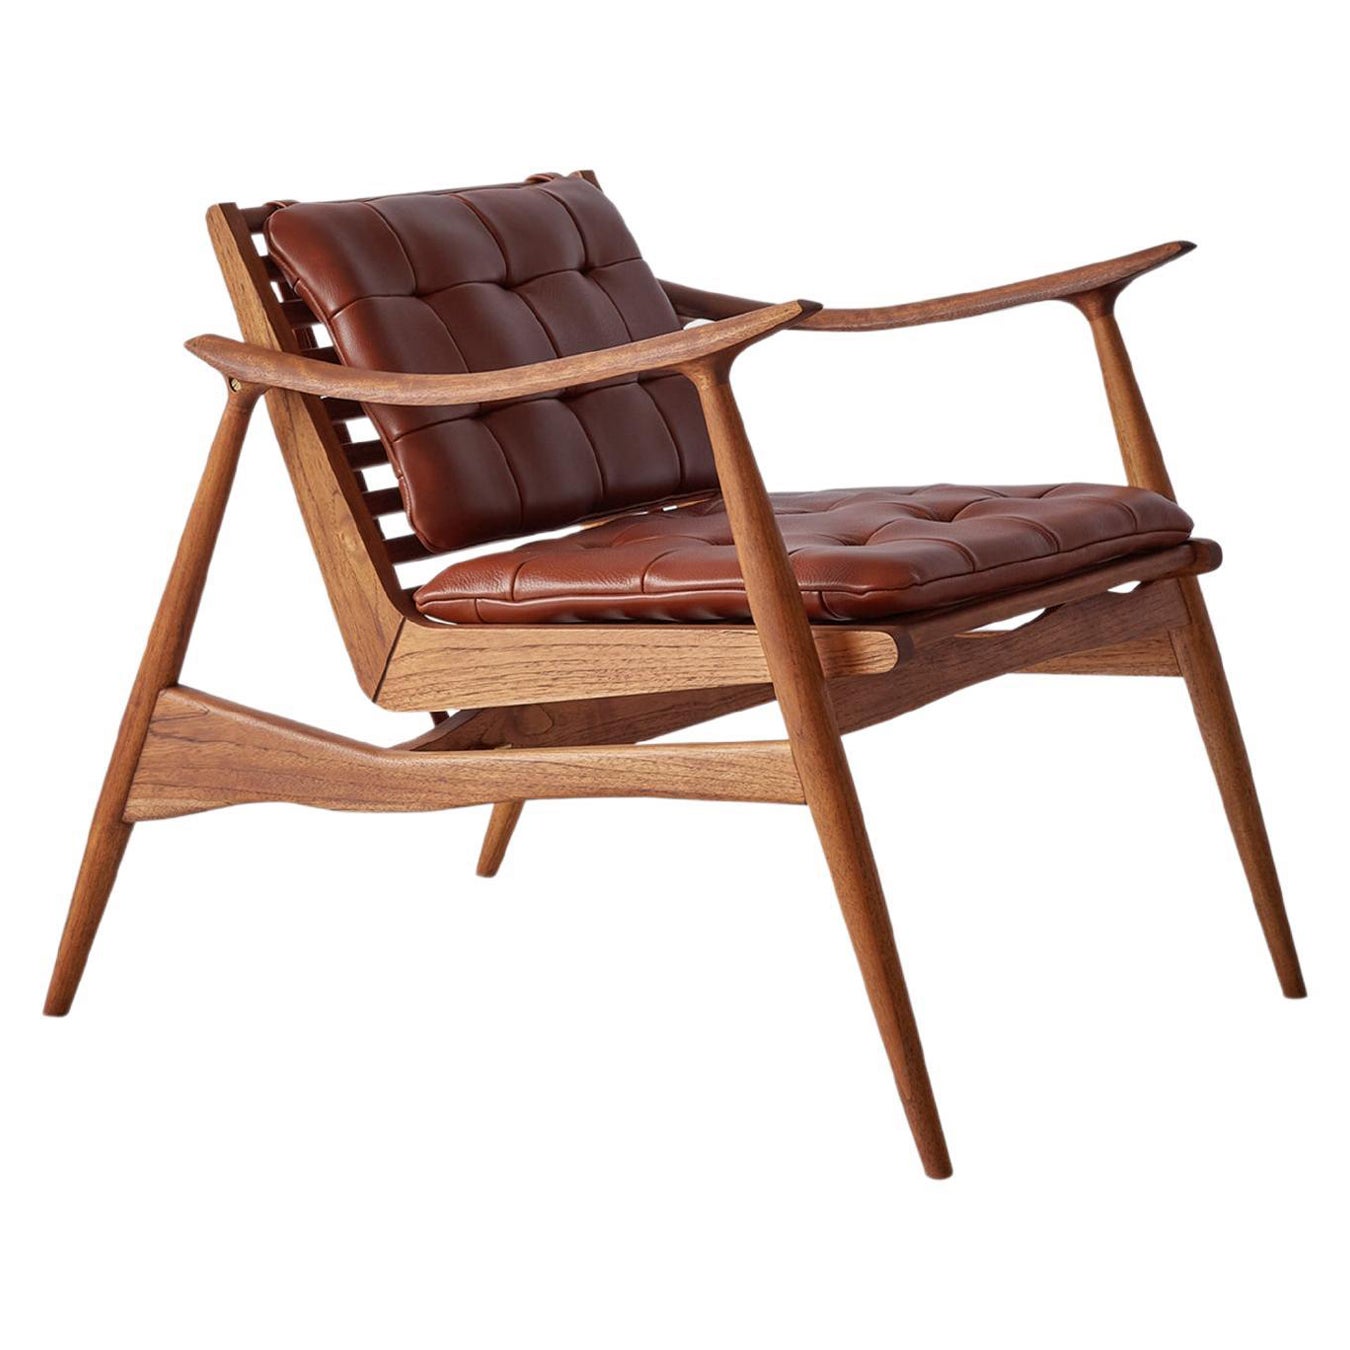 Brown Atra Lounge Chair by Atra Design